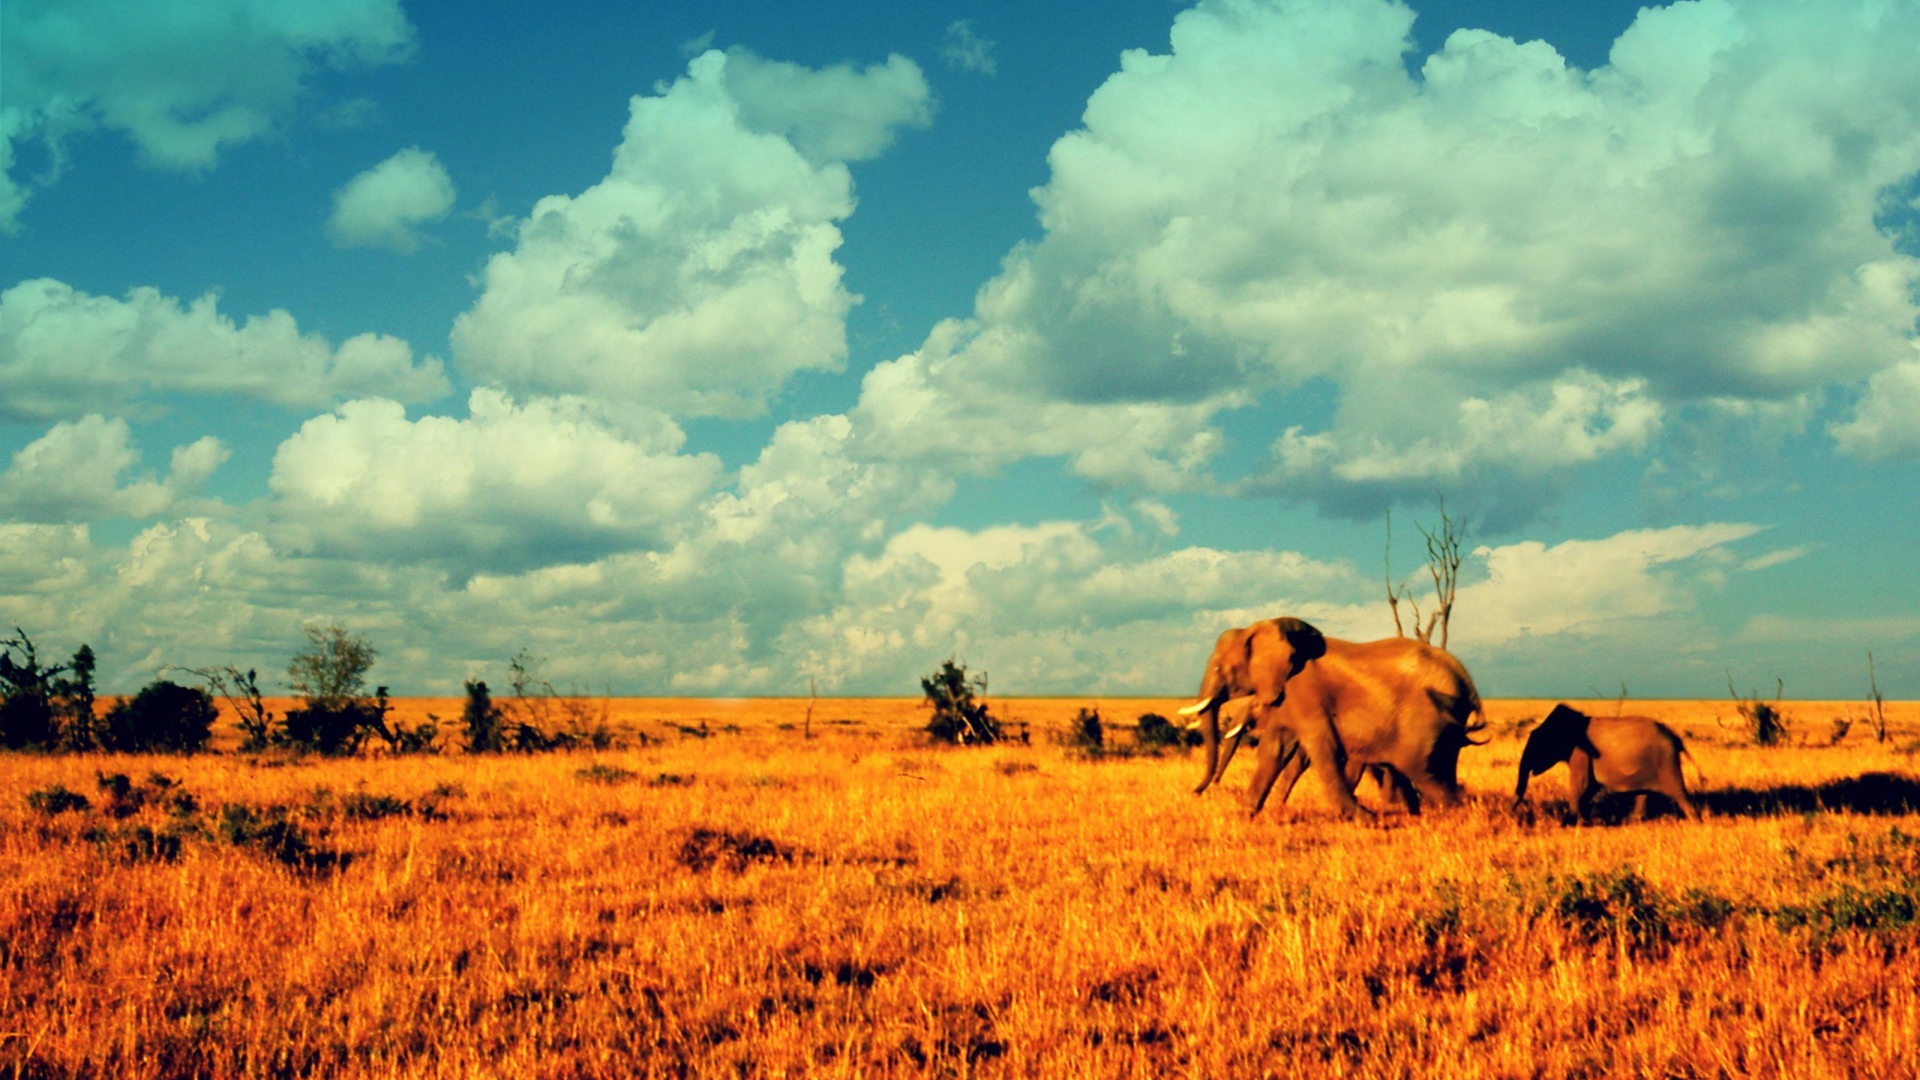 Elephants in the savanna